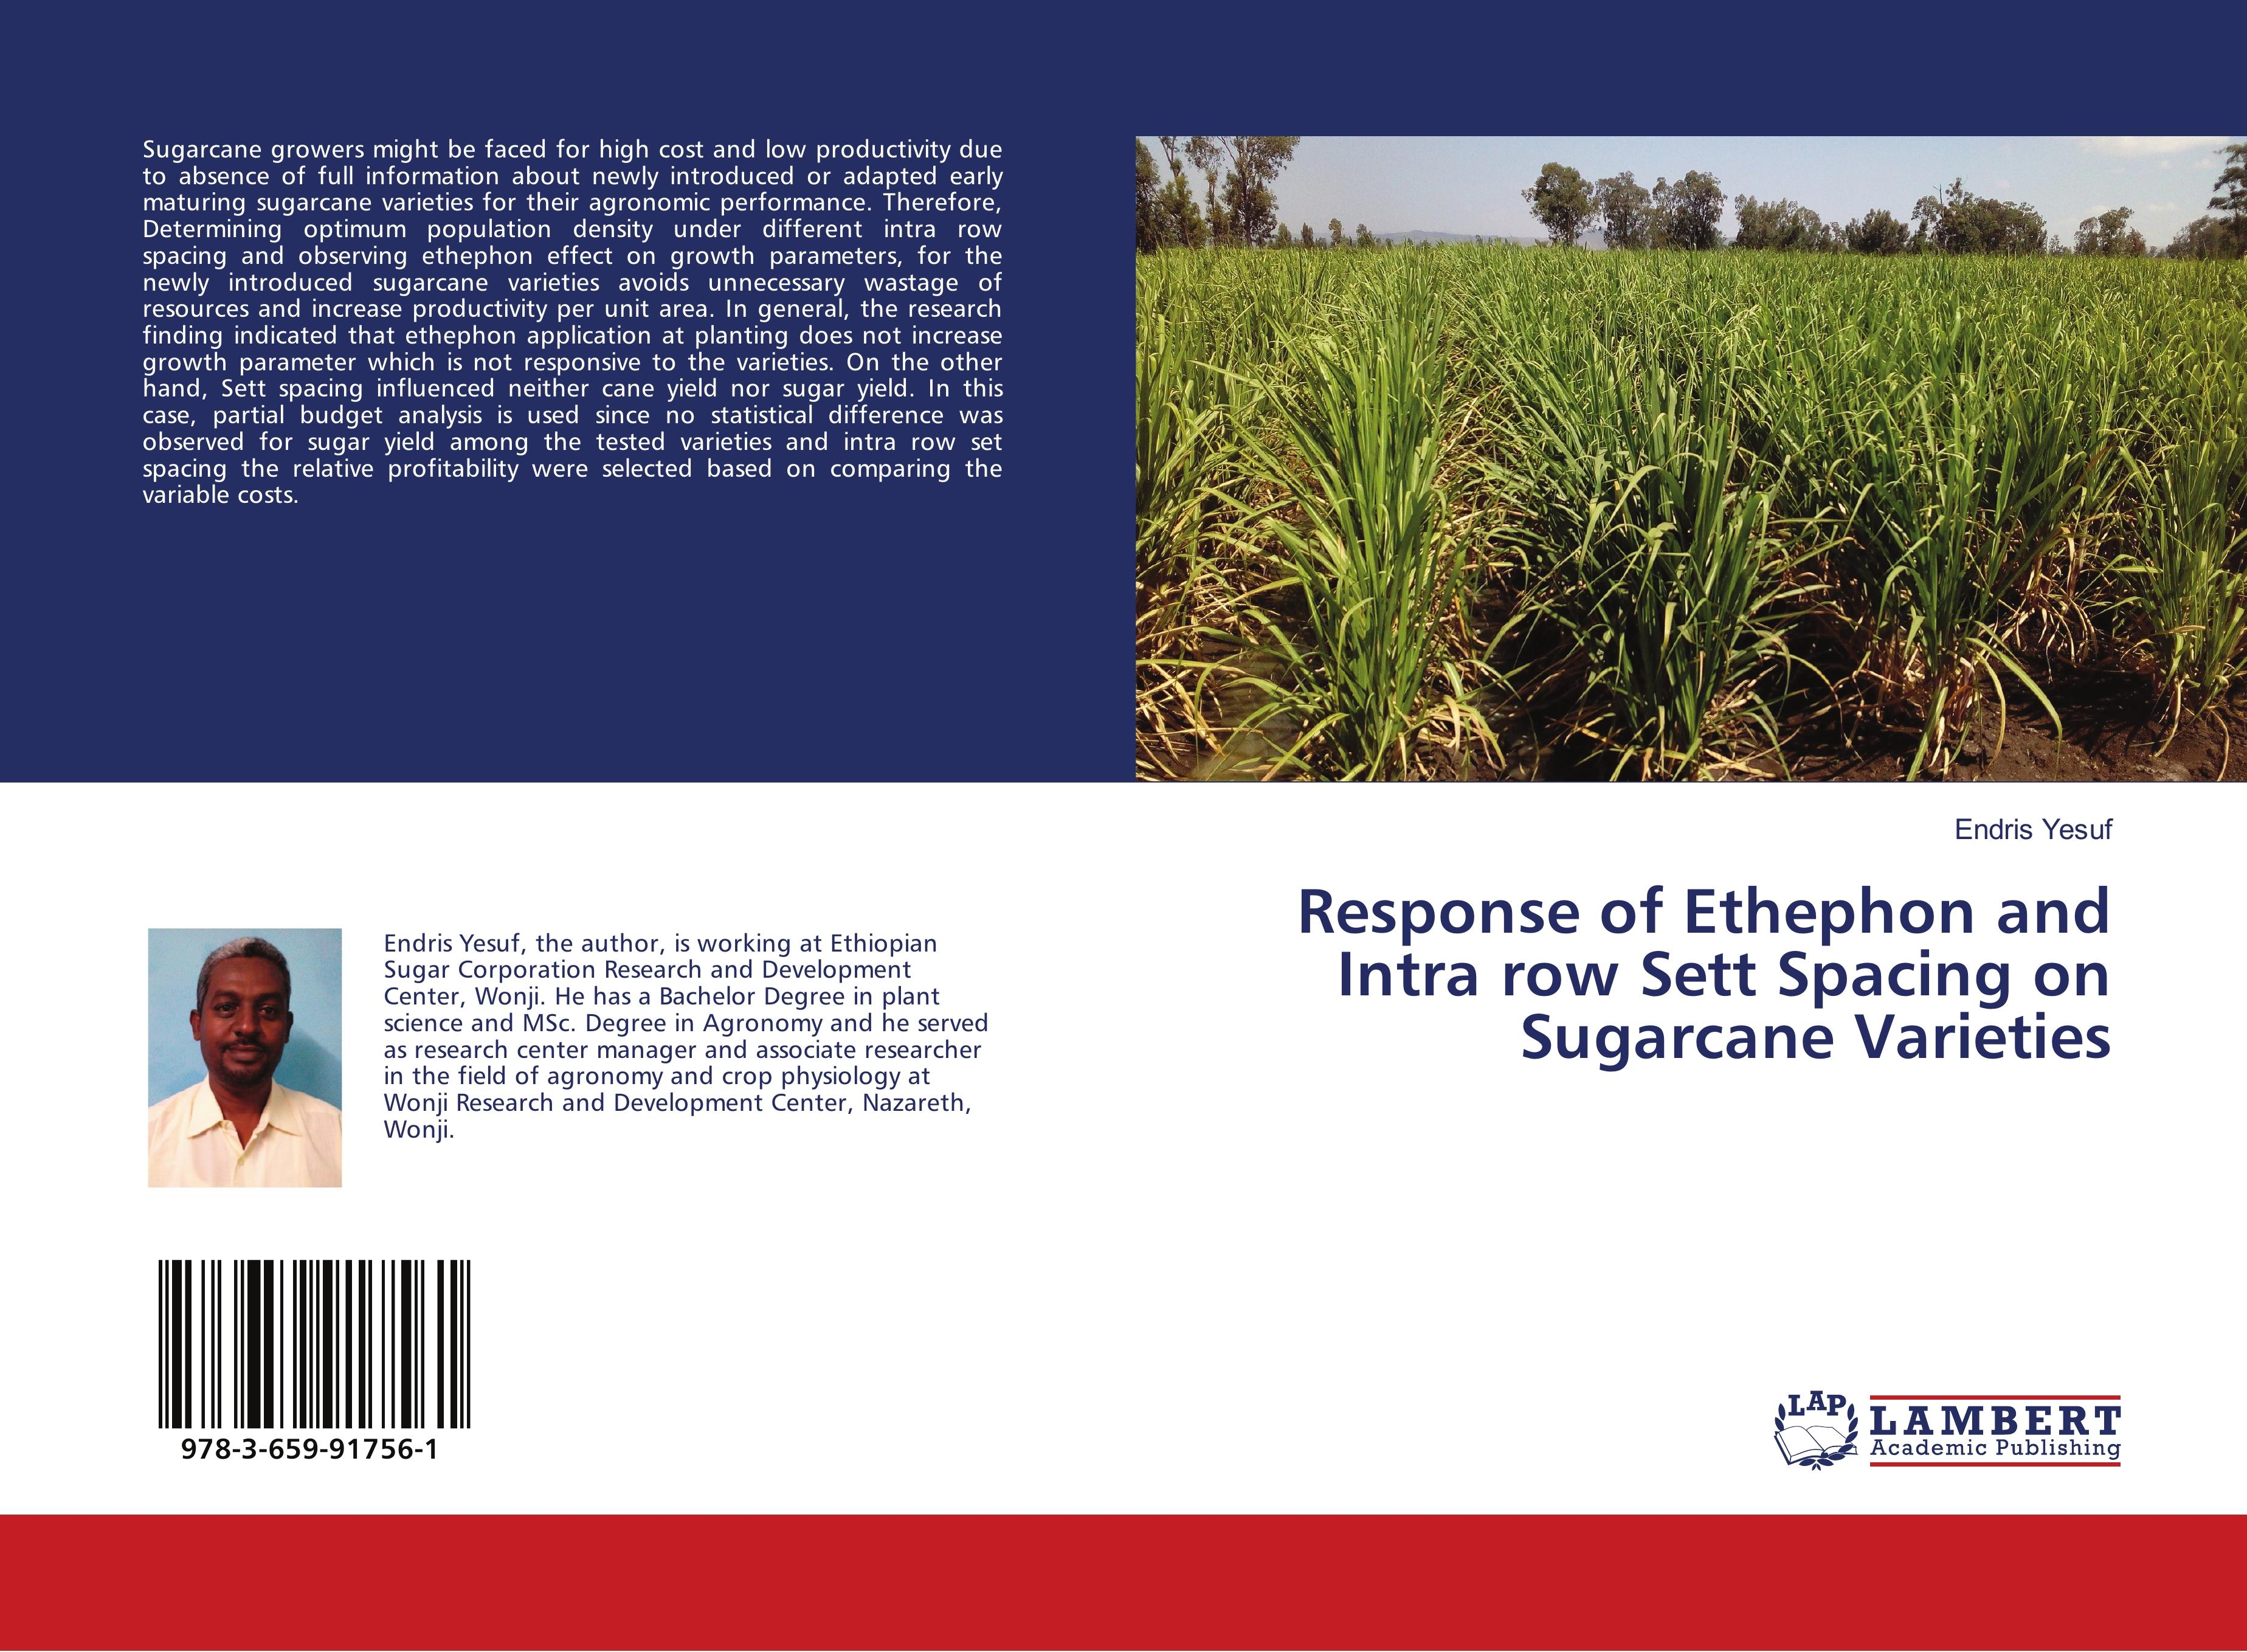 Response of Ethephon and Intra row Sett Spacing on Sugarcane Varieties - Endris Yesuf